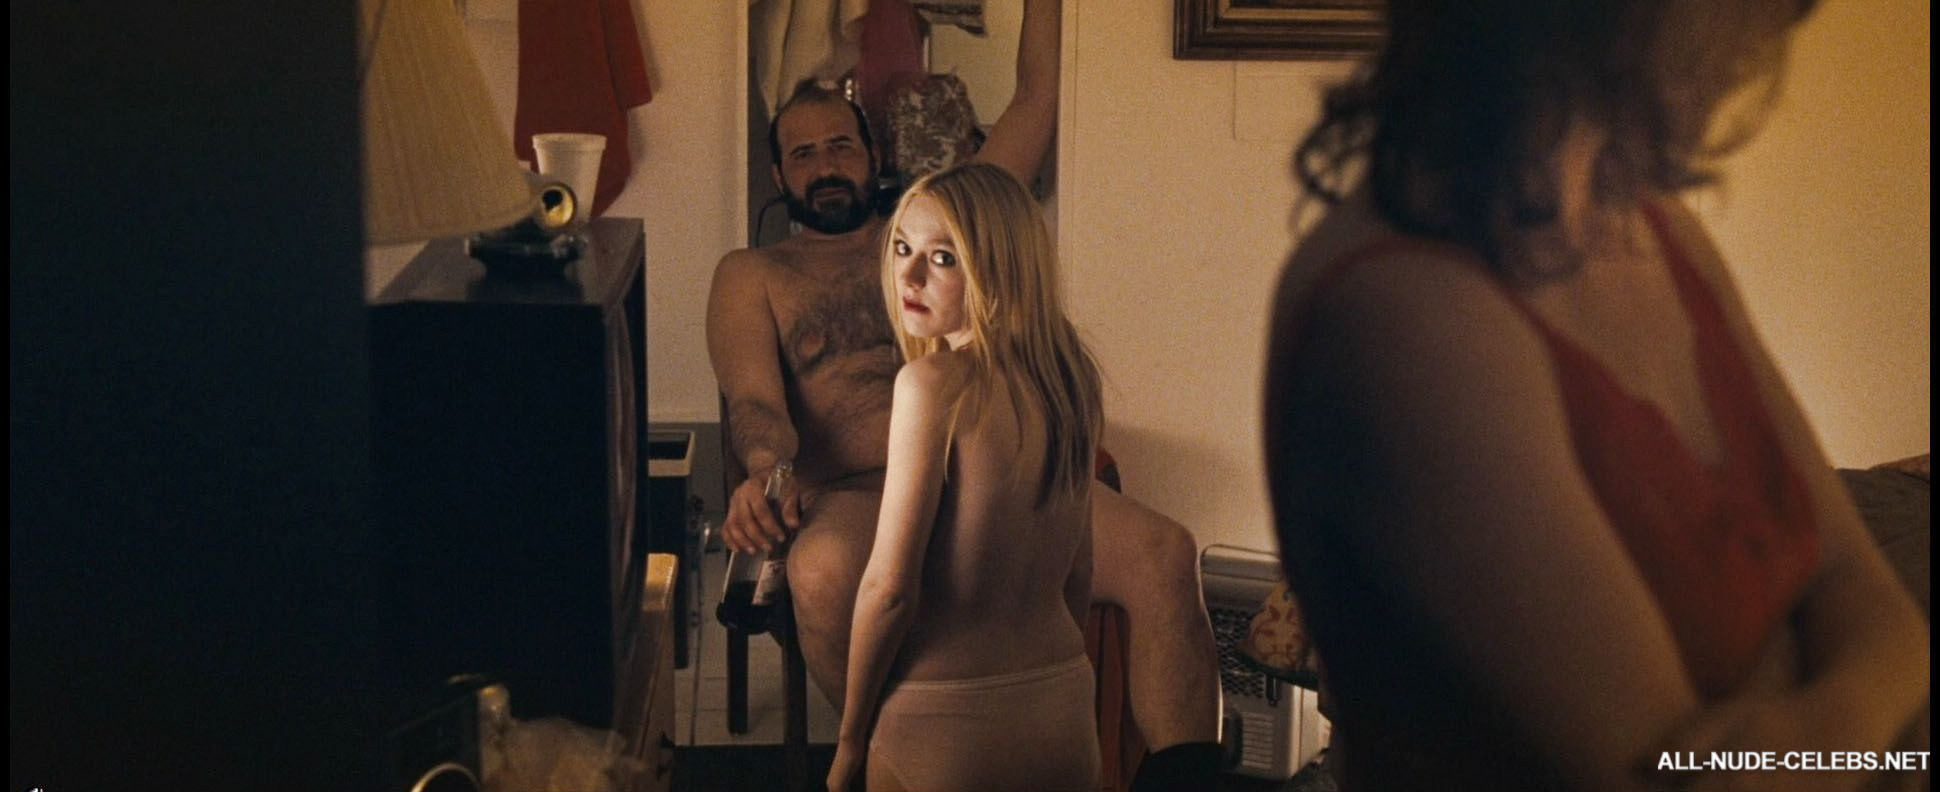 Dakota fanning nude, sexy, the fappening, uncensored